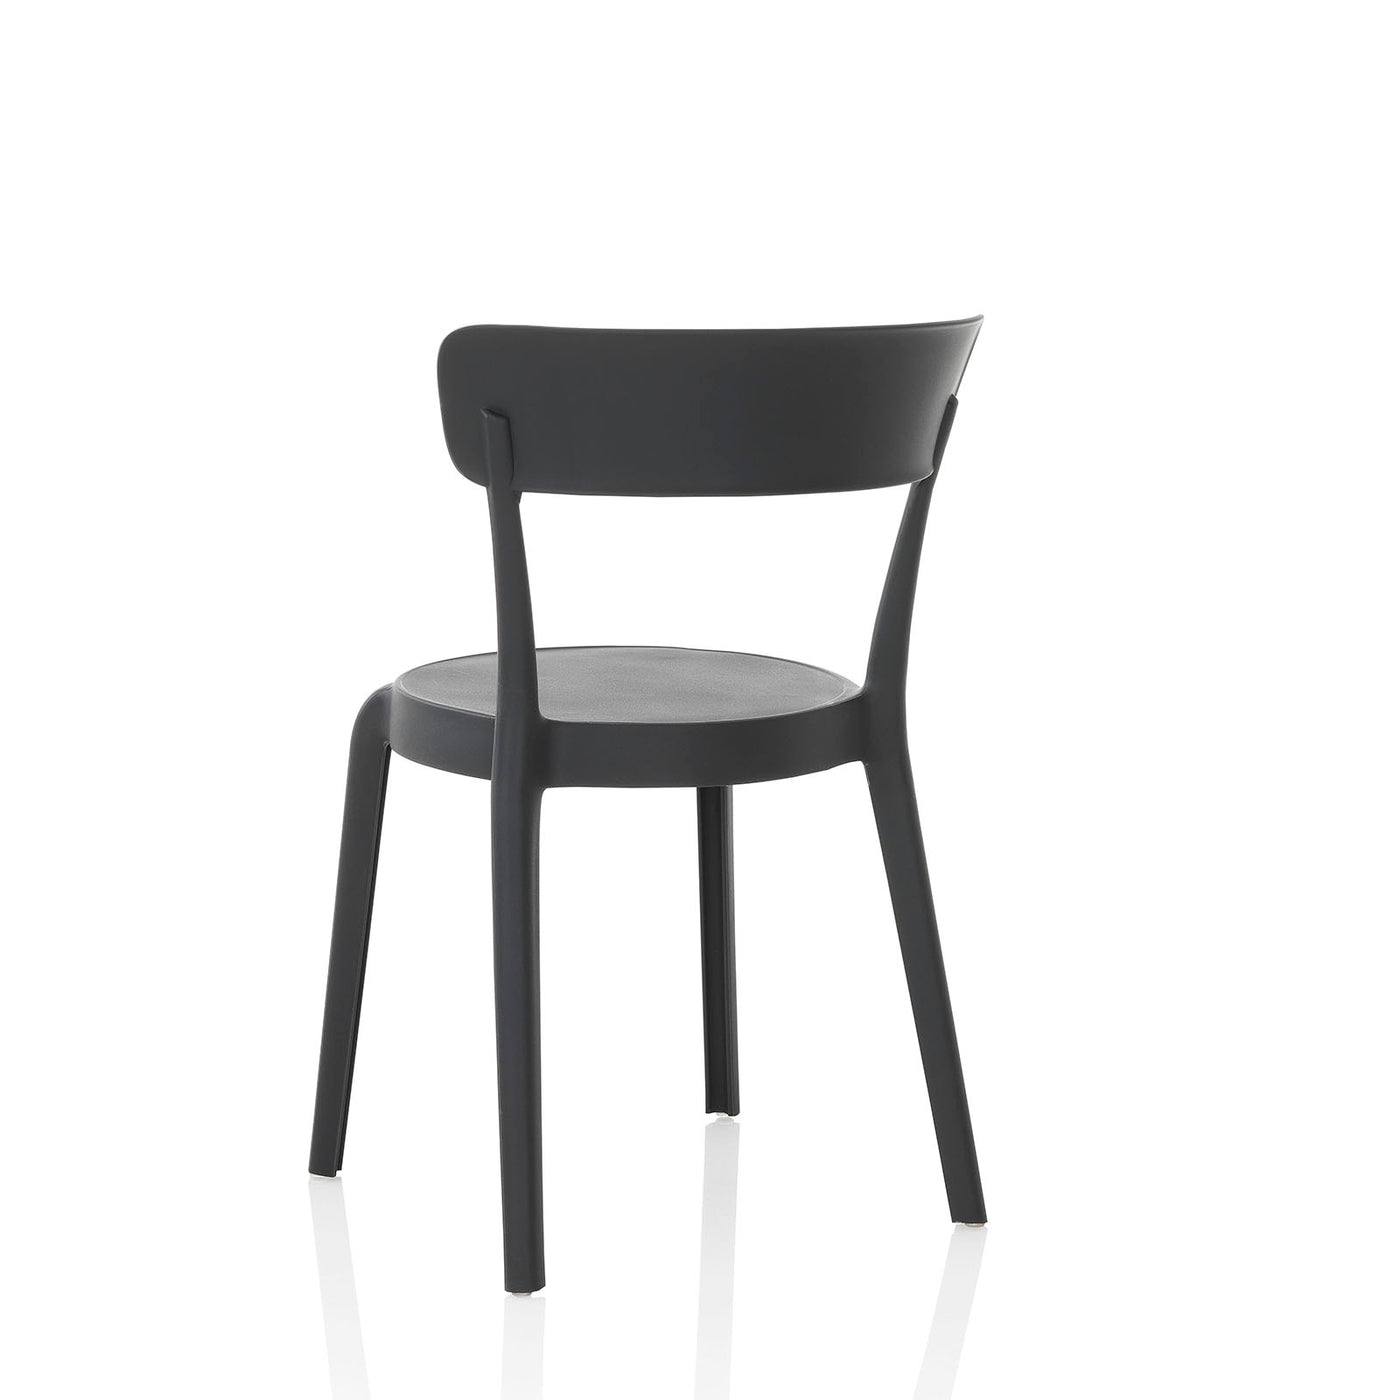 Set of 4 indoor/outdoor chairs MOSS anthracite